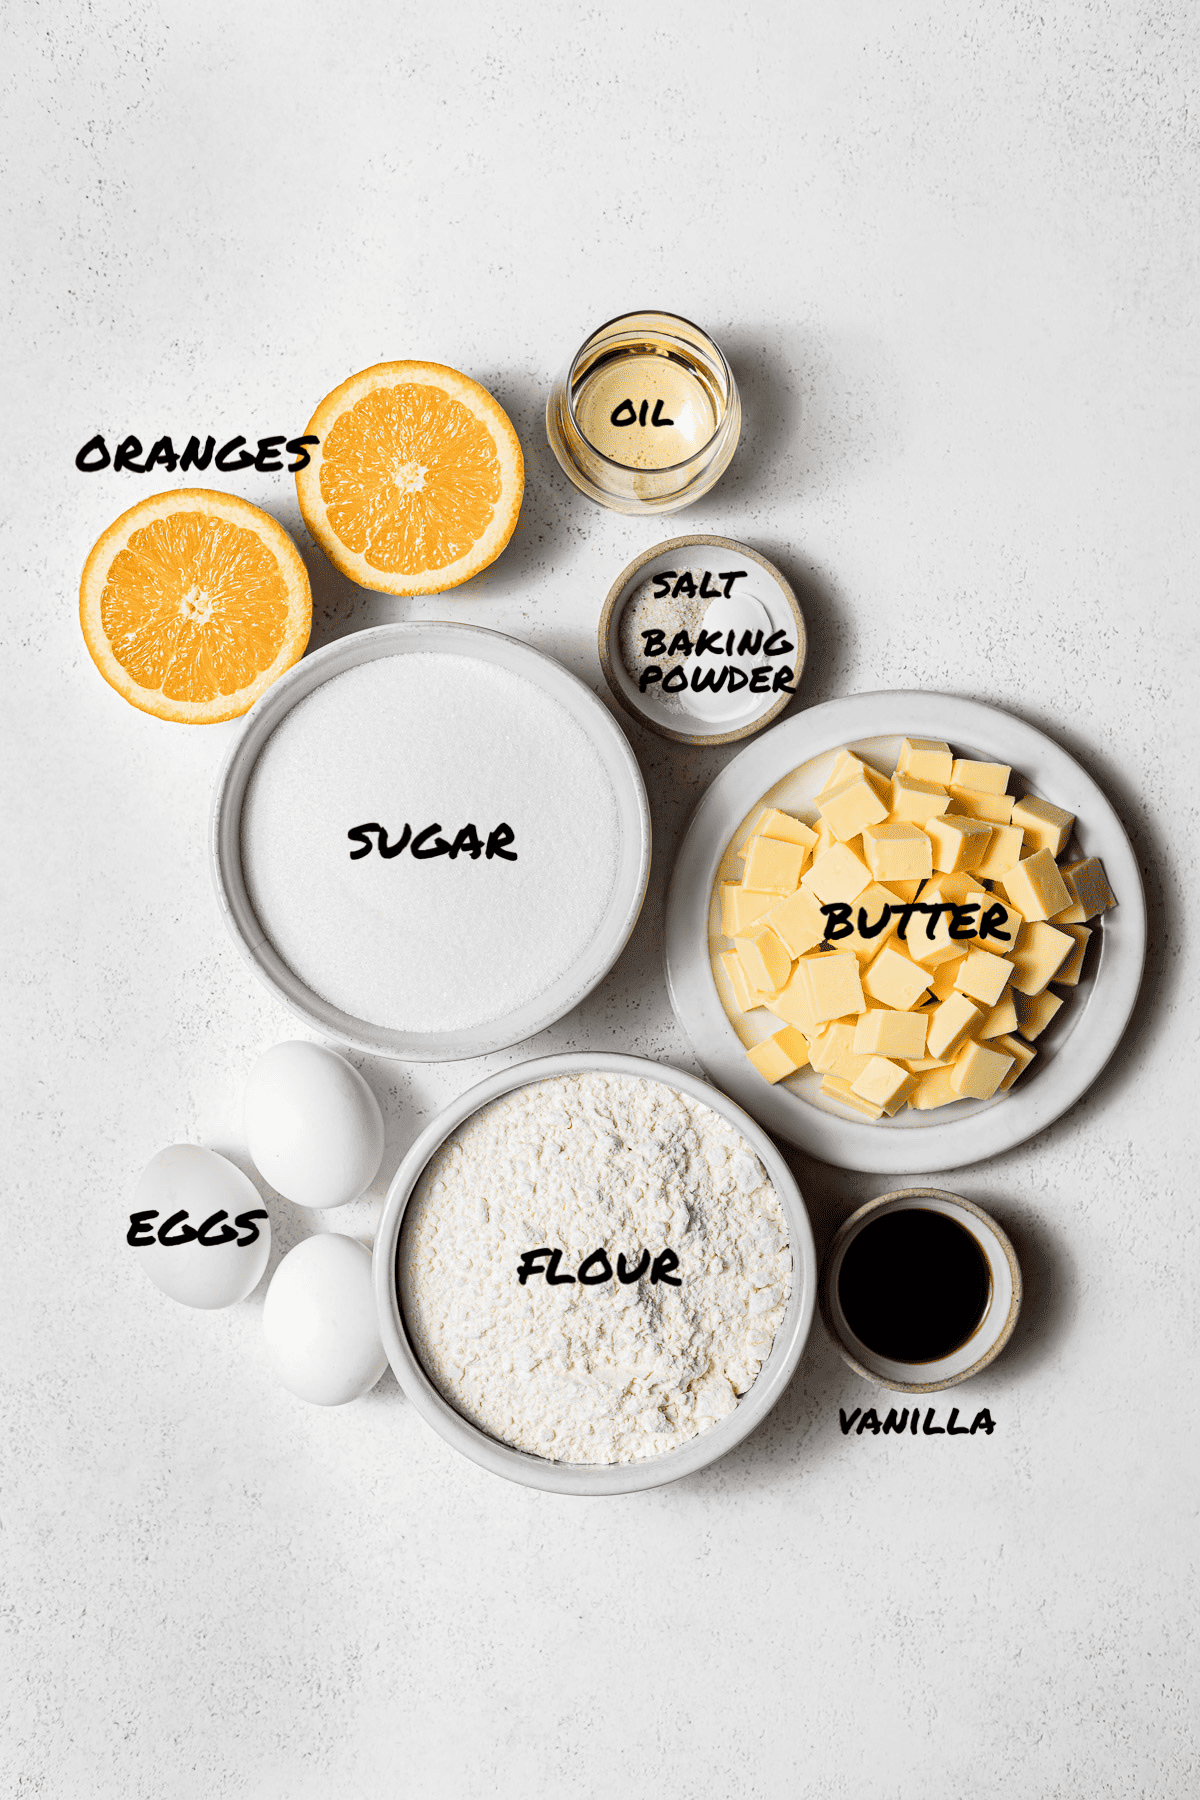 ingredients for the orange pound cake.